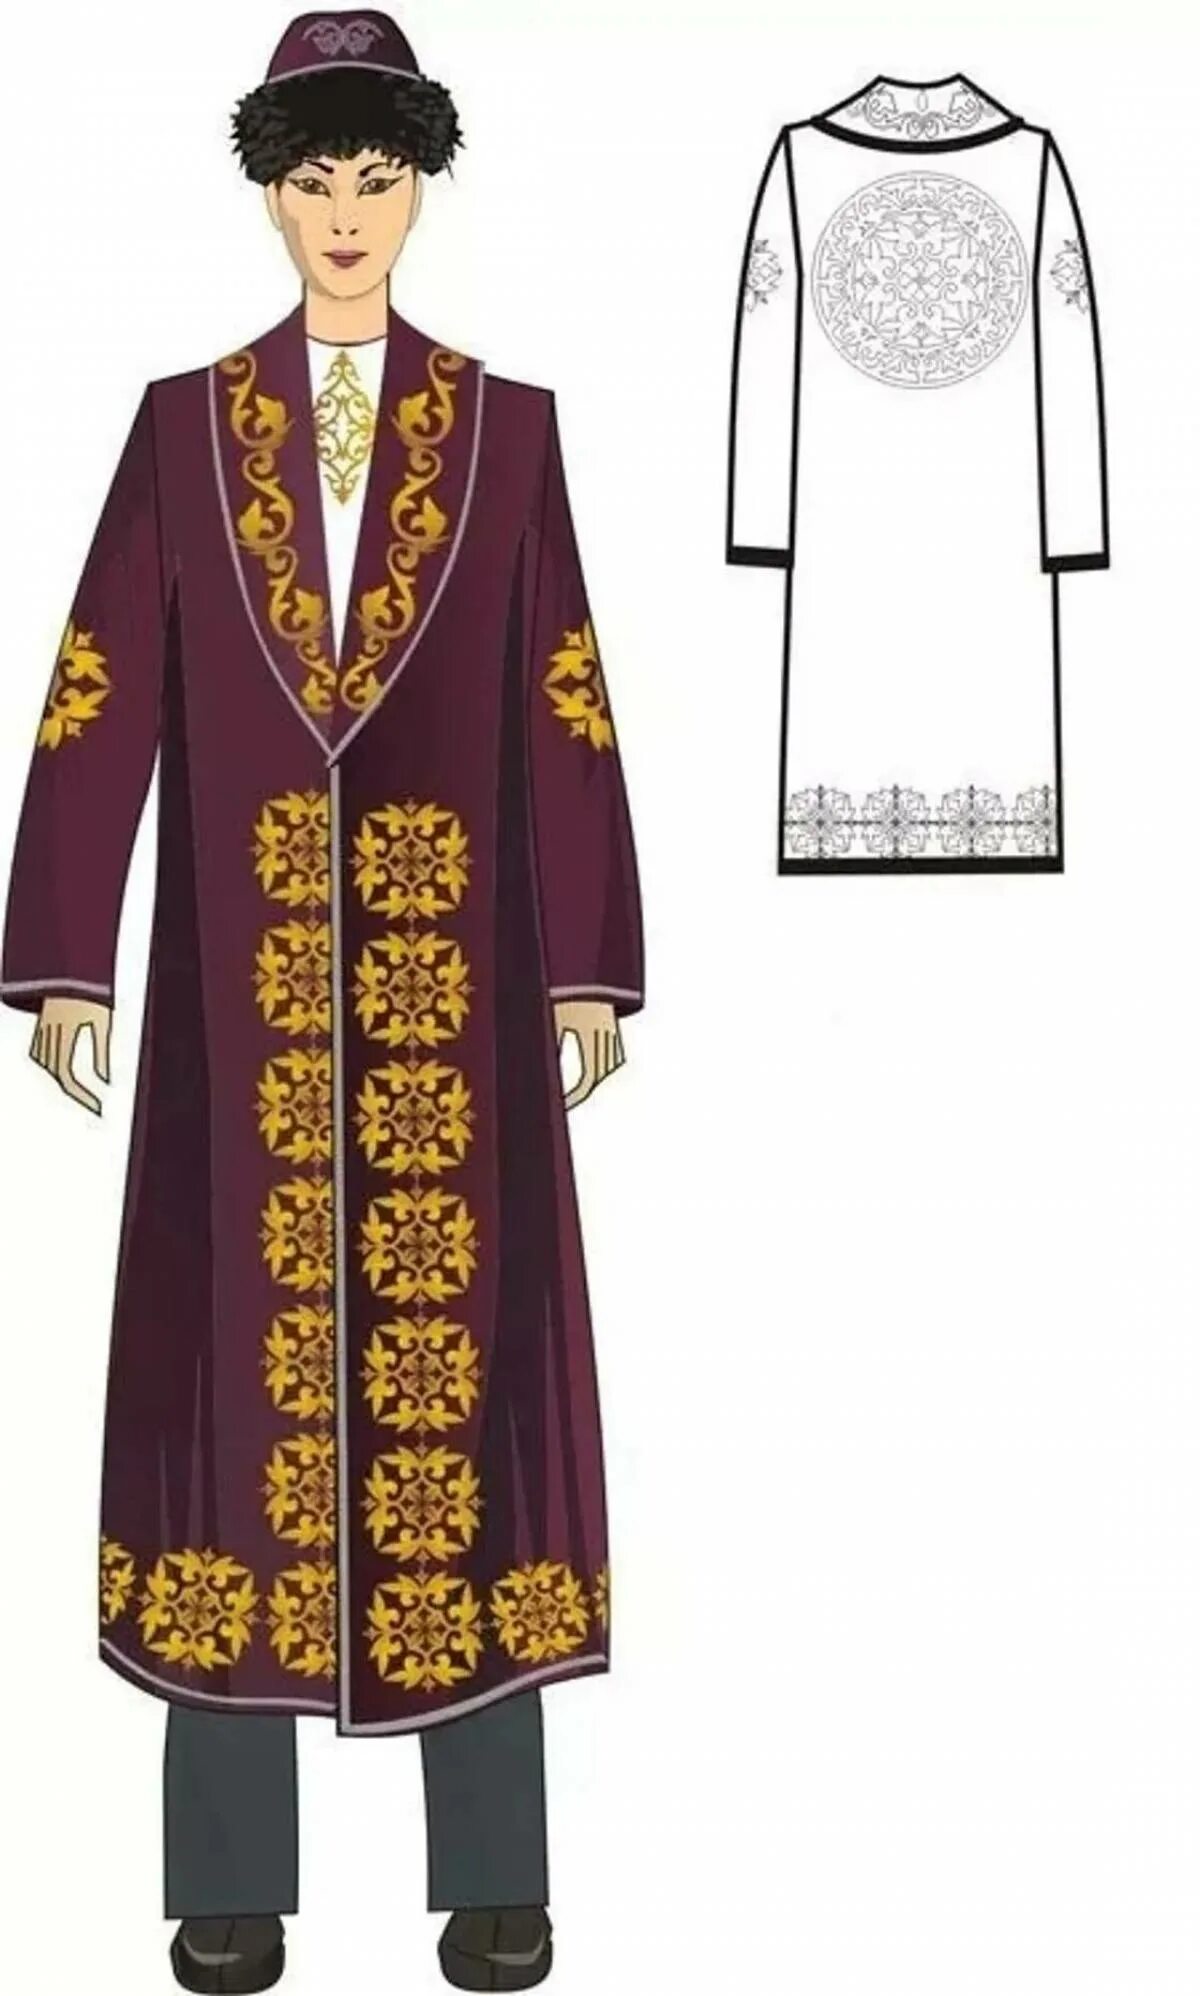 Чапан казахский. Казахская Национальная одежда шапан. Казахи национальный костюм шапан. Шапан казахская одежда мужская. Казахская мужская Национальная одежда камзол для раскрашивания.